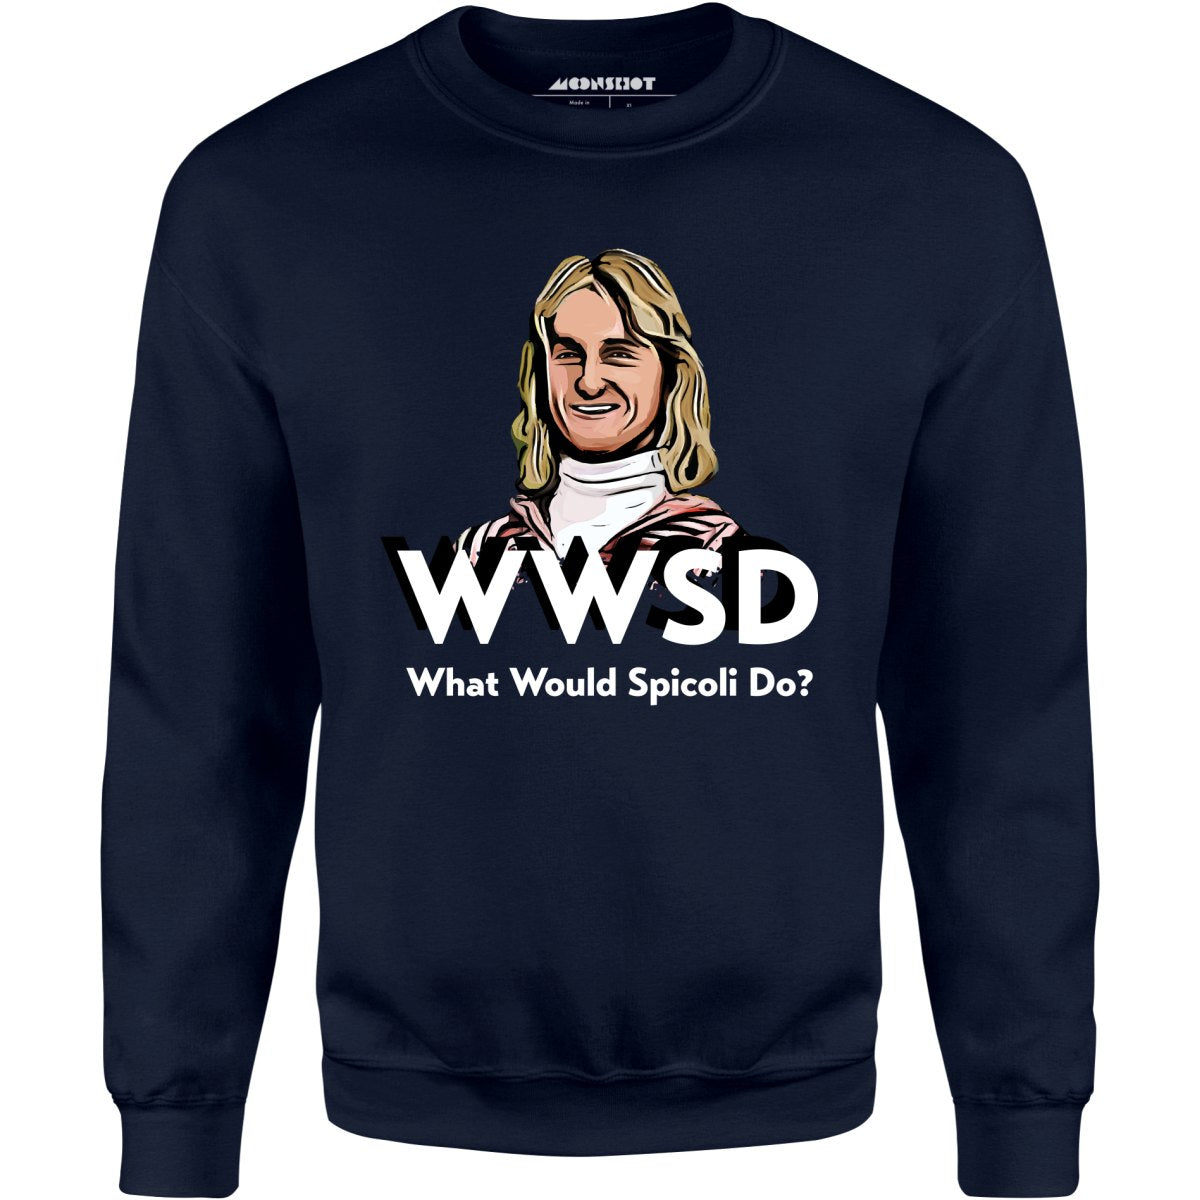 What Would Spicoli Do? - Unisex Sweatshirt